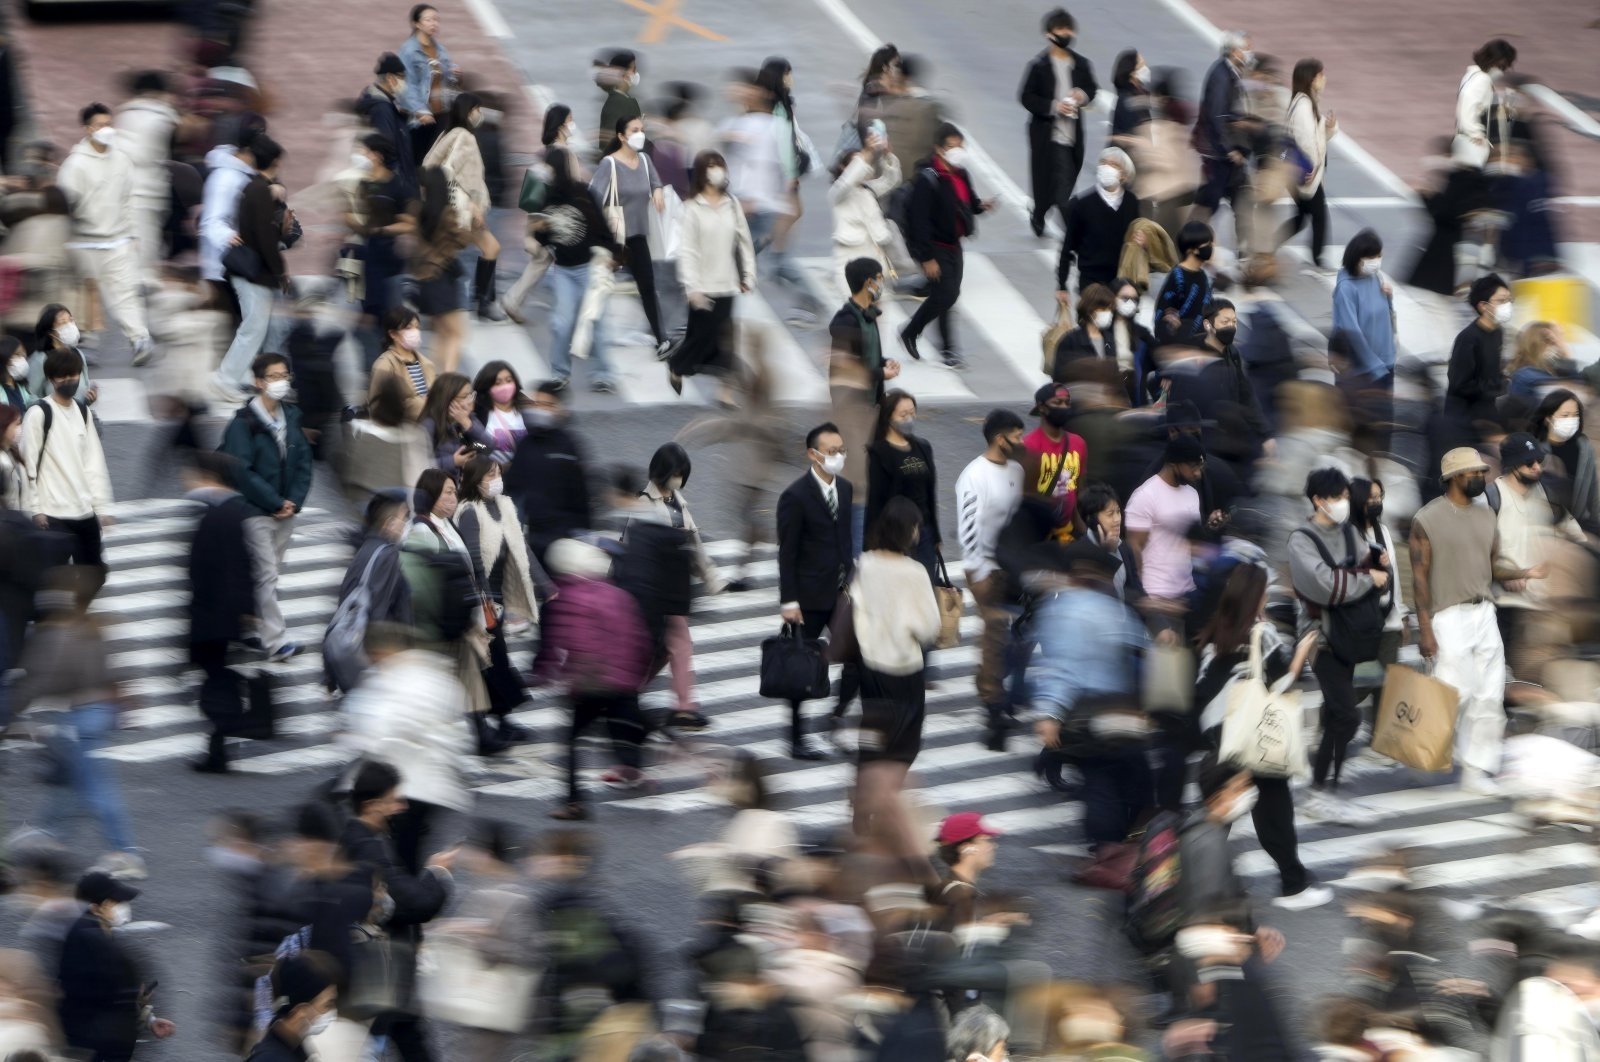 Pedestrians cross a street in the Shibuya district of Tokyo, Japan, Nov. 24, 2022. (EPA File Photo)